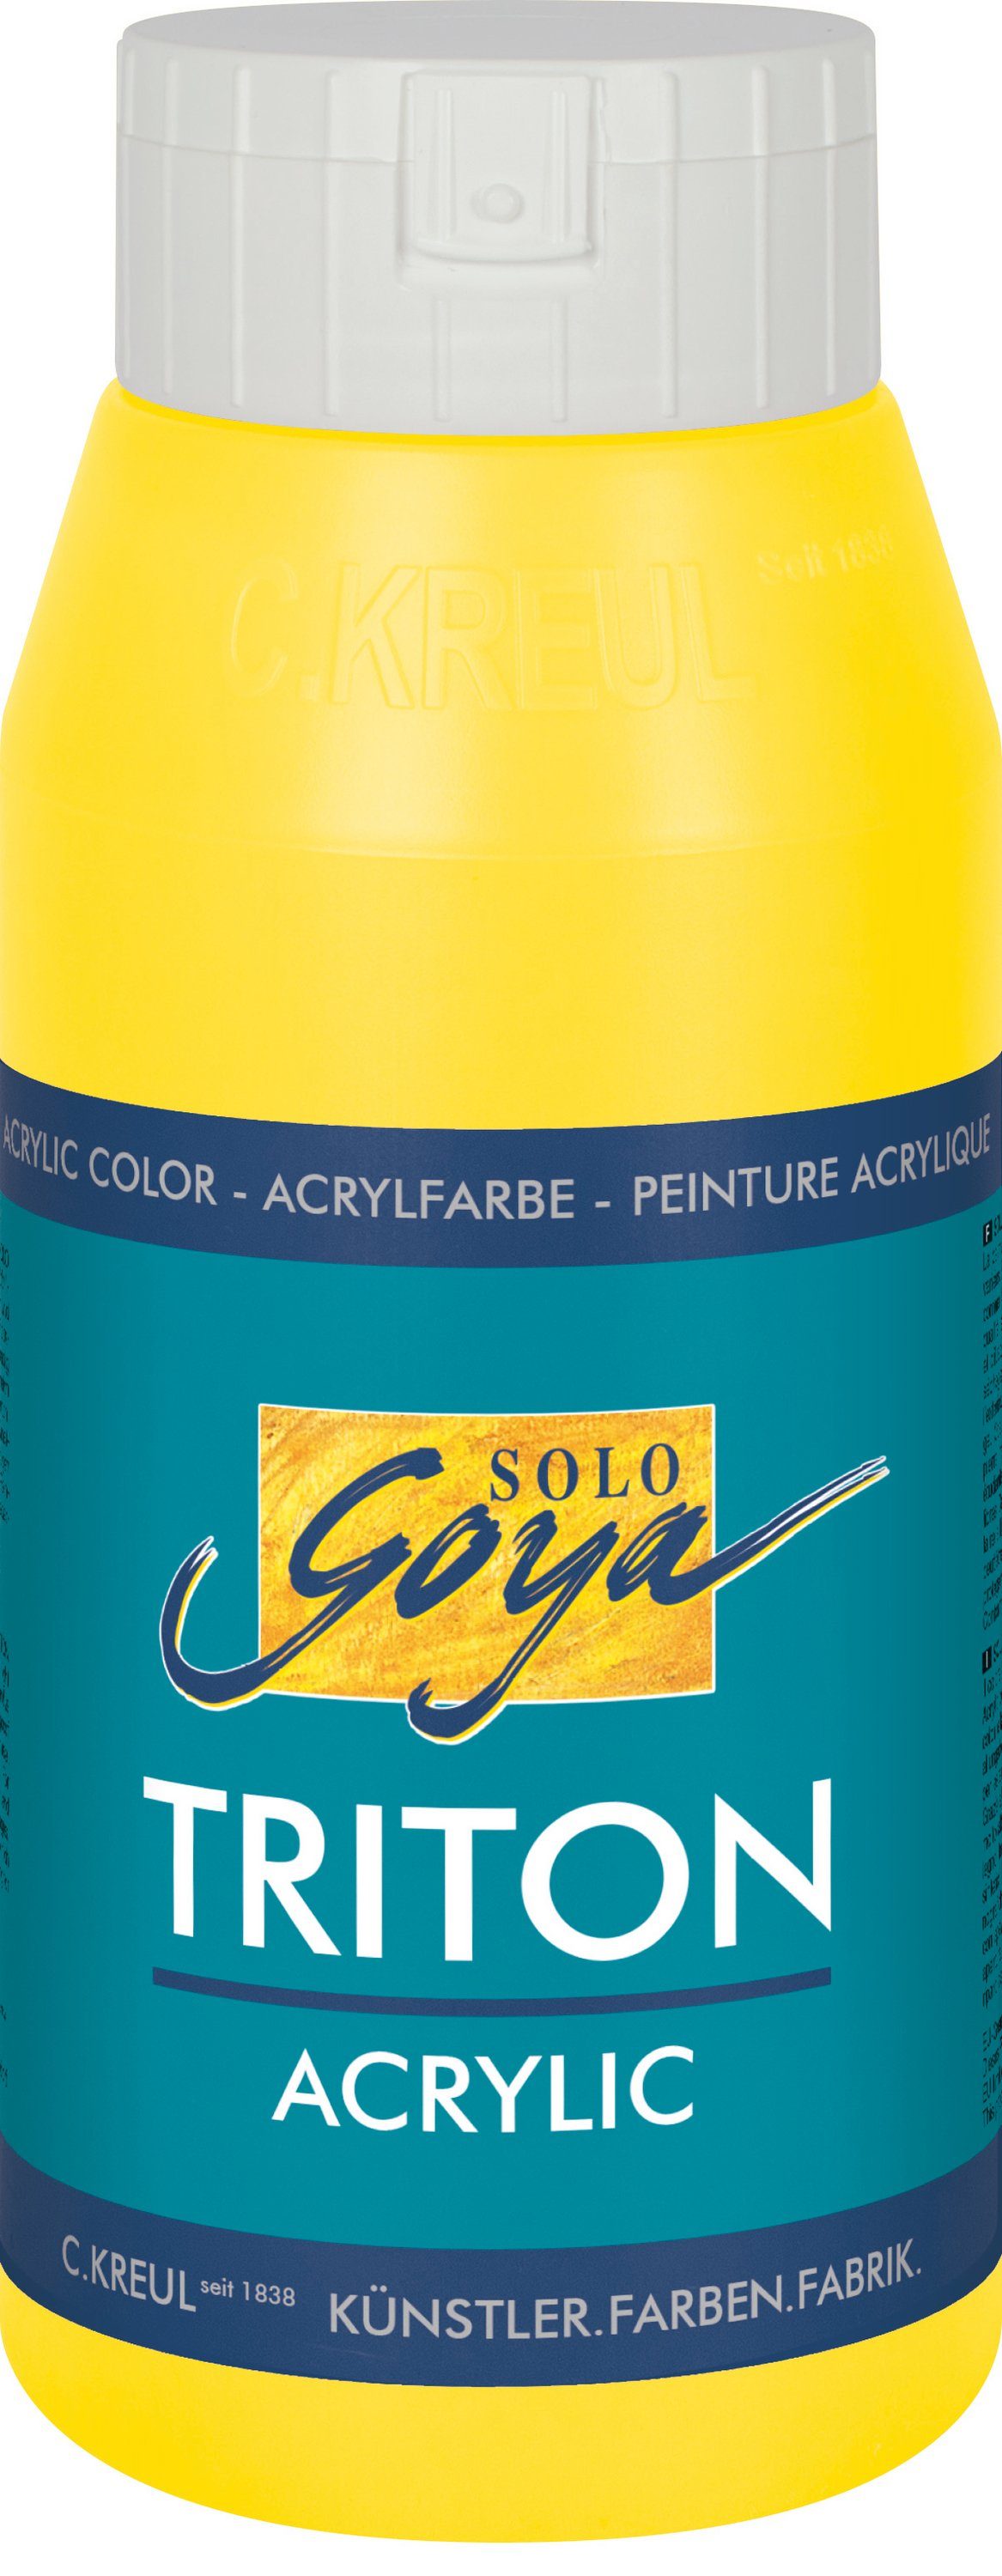 Kreul Acrylfarbe Solo 750 ml Acrylic, Goya Triton Echtgelb-Hell